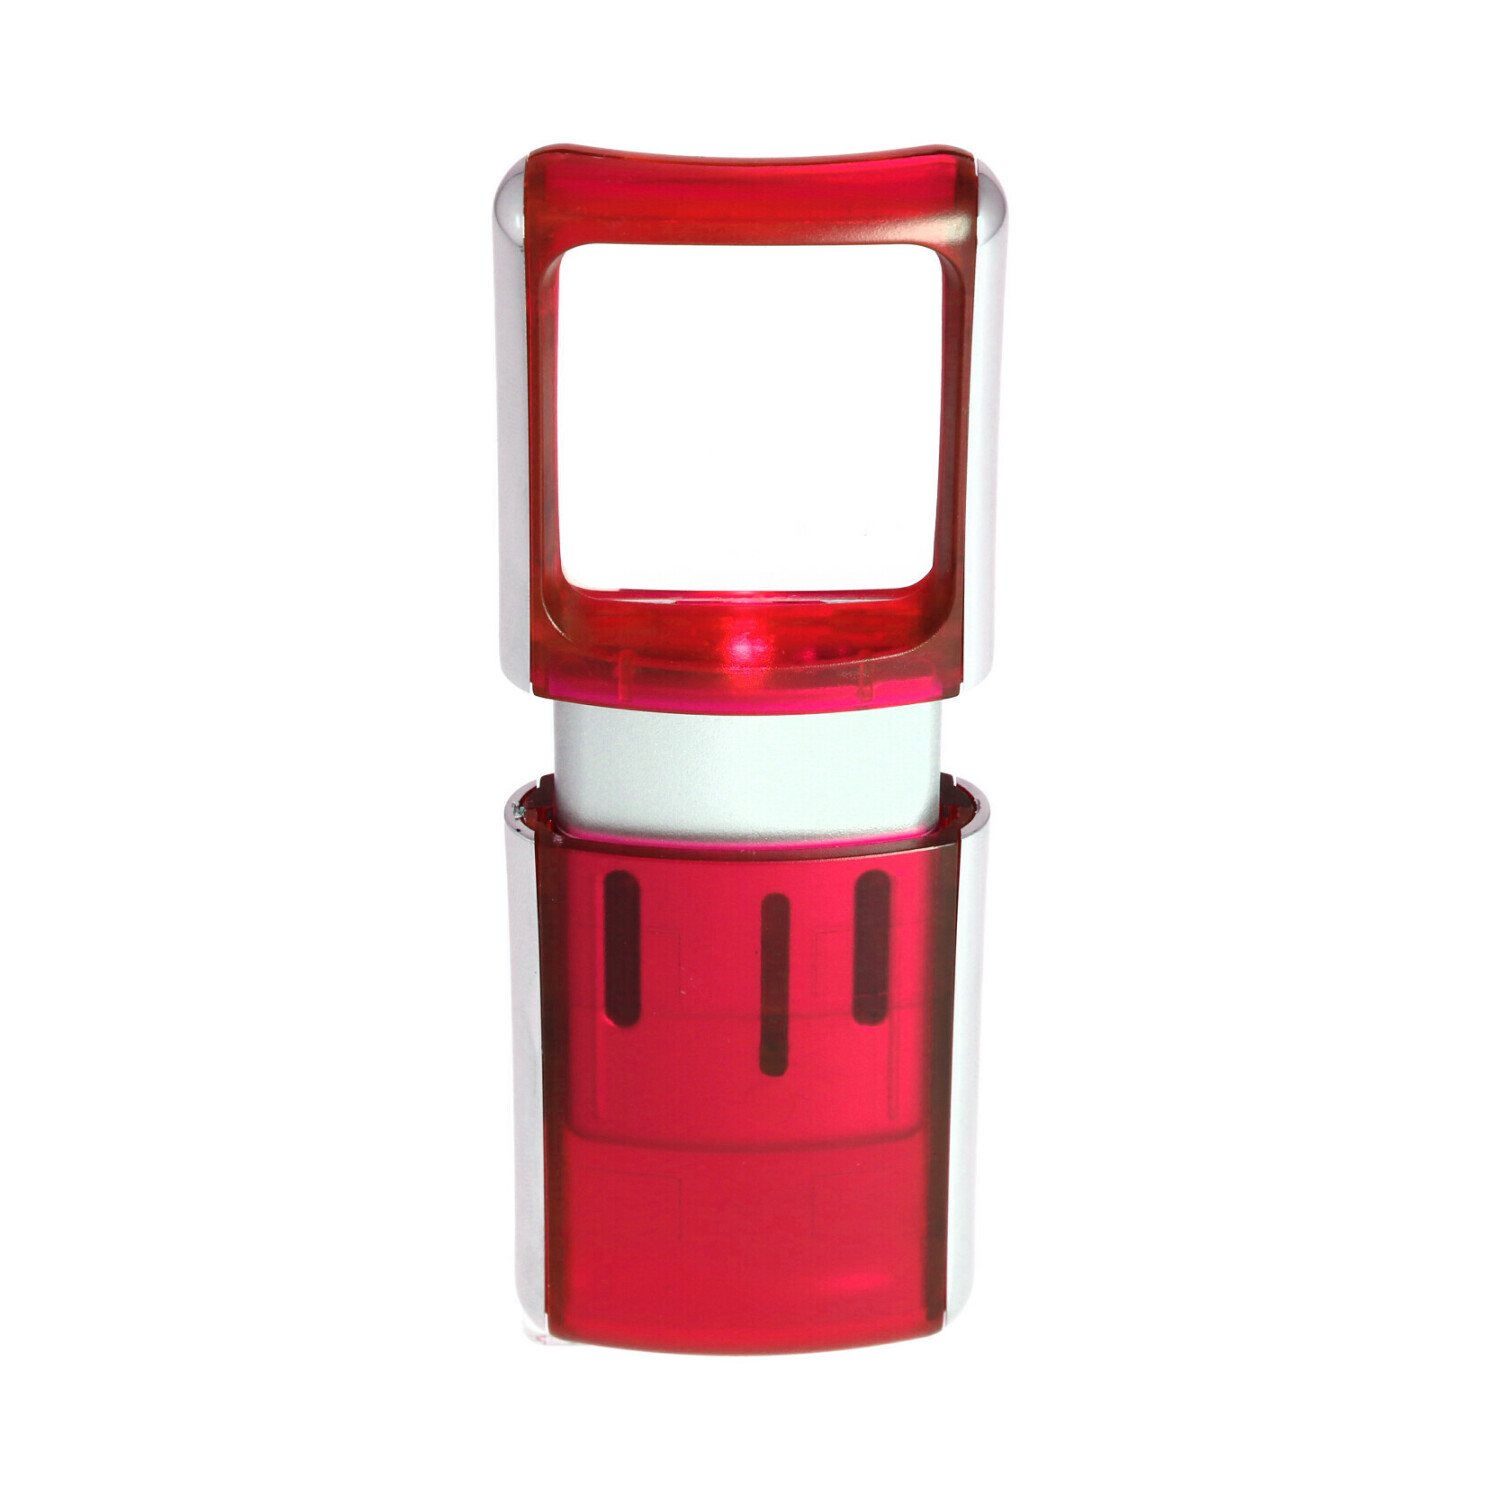 LED-Lupe mit LED-Beleuchtung und 3fach Vergrösserung Farbe Rot